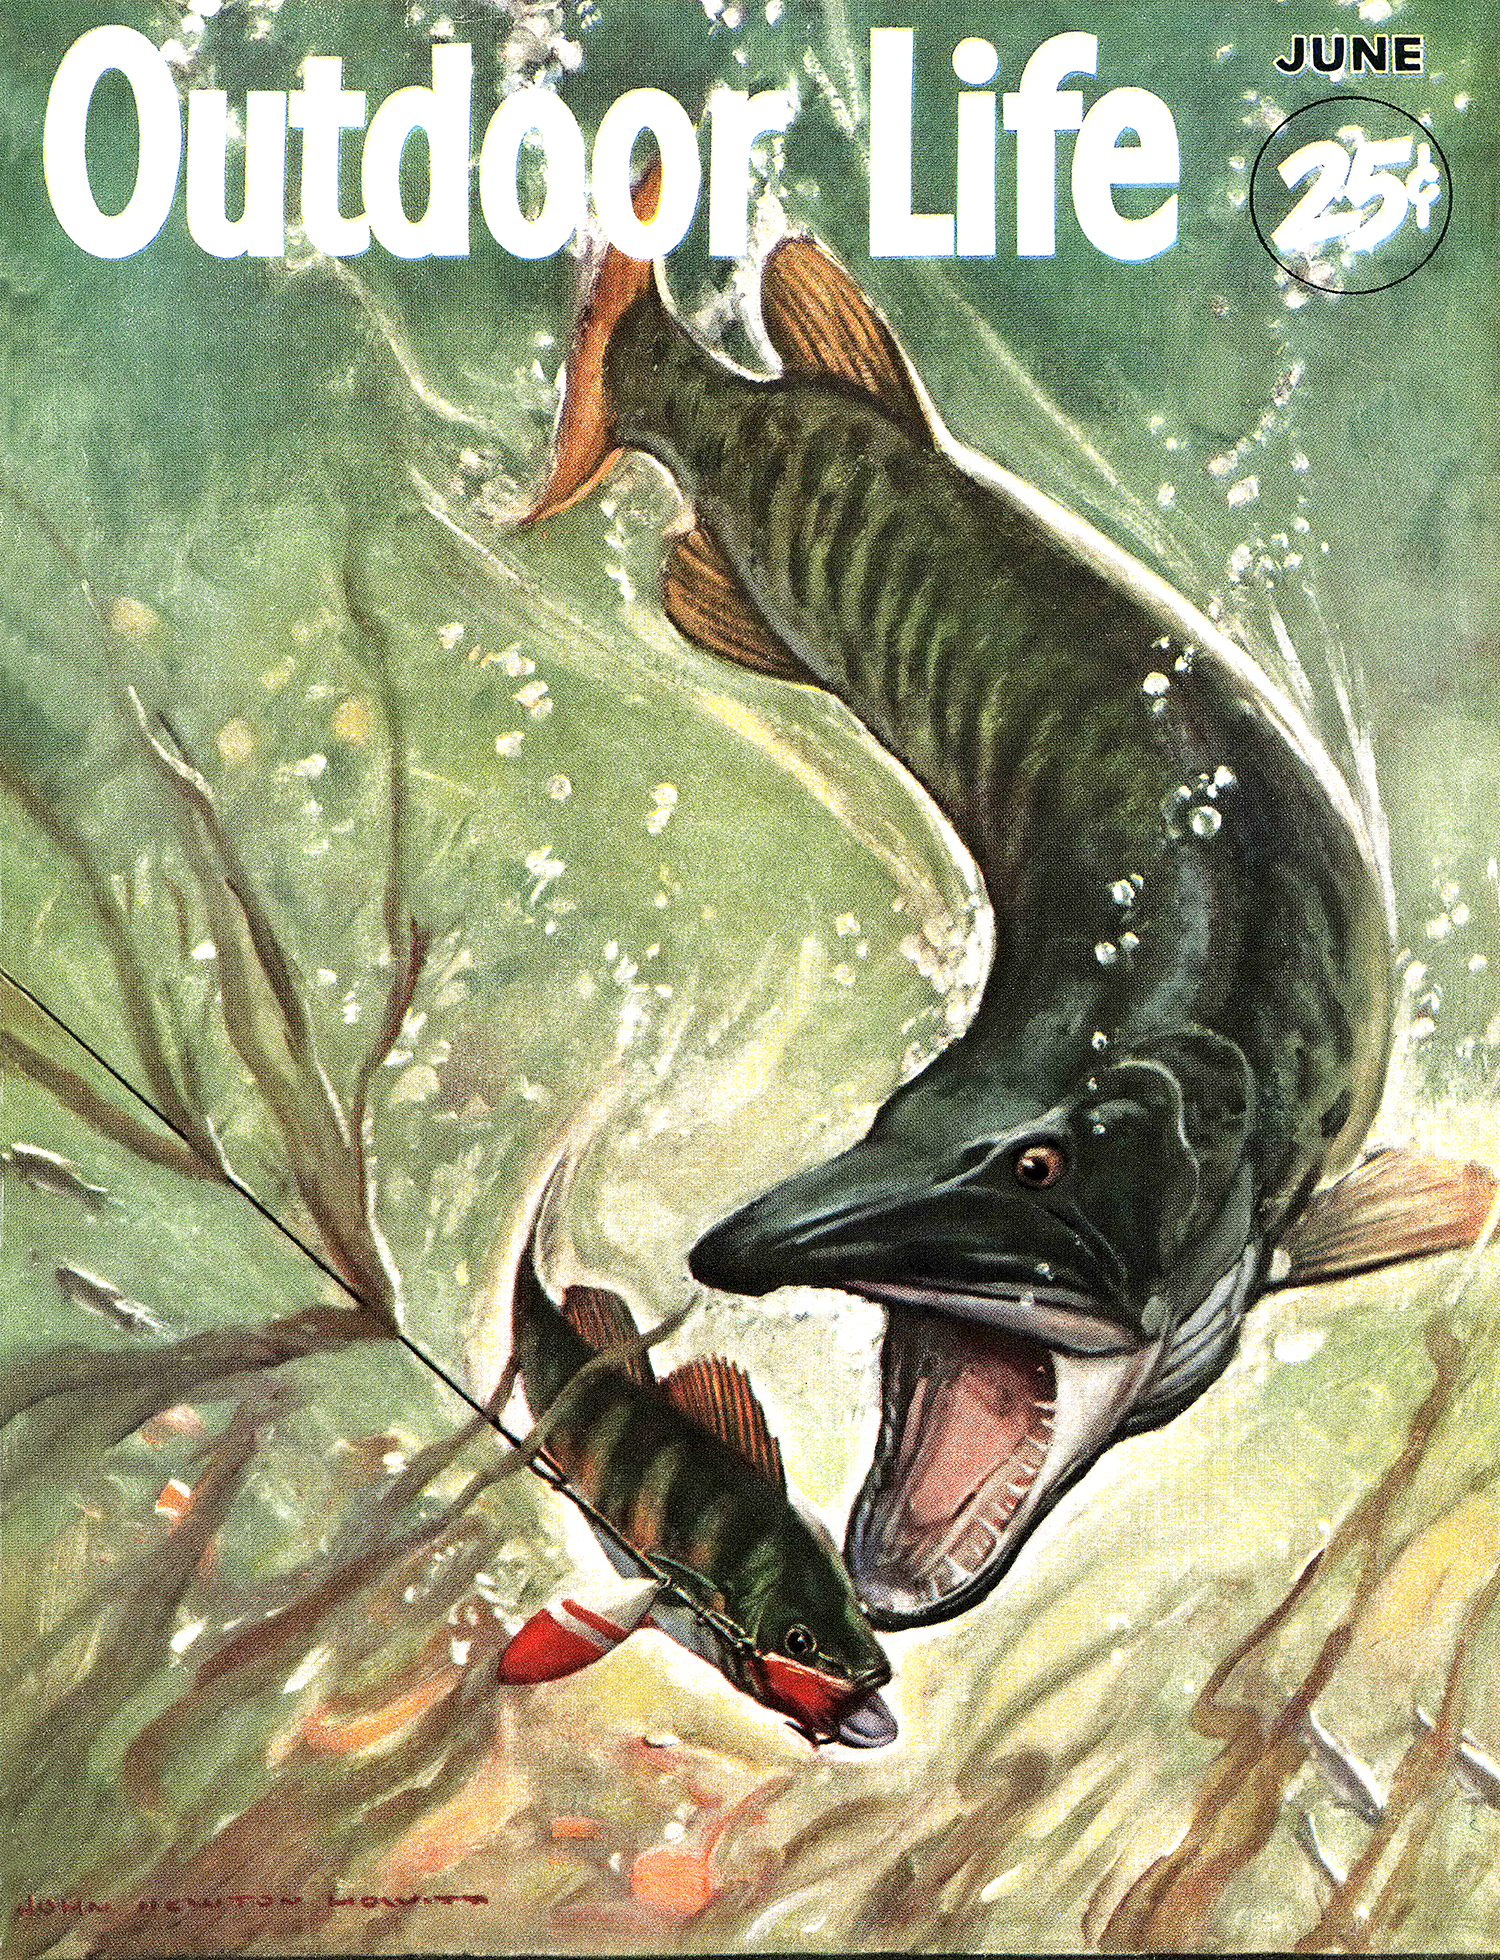 June 1952 magazine cover